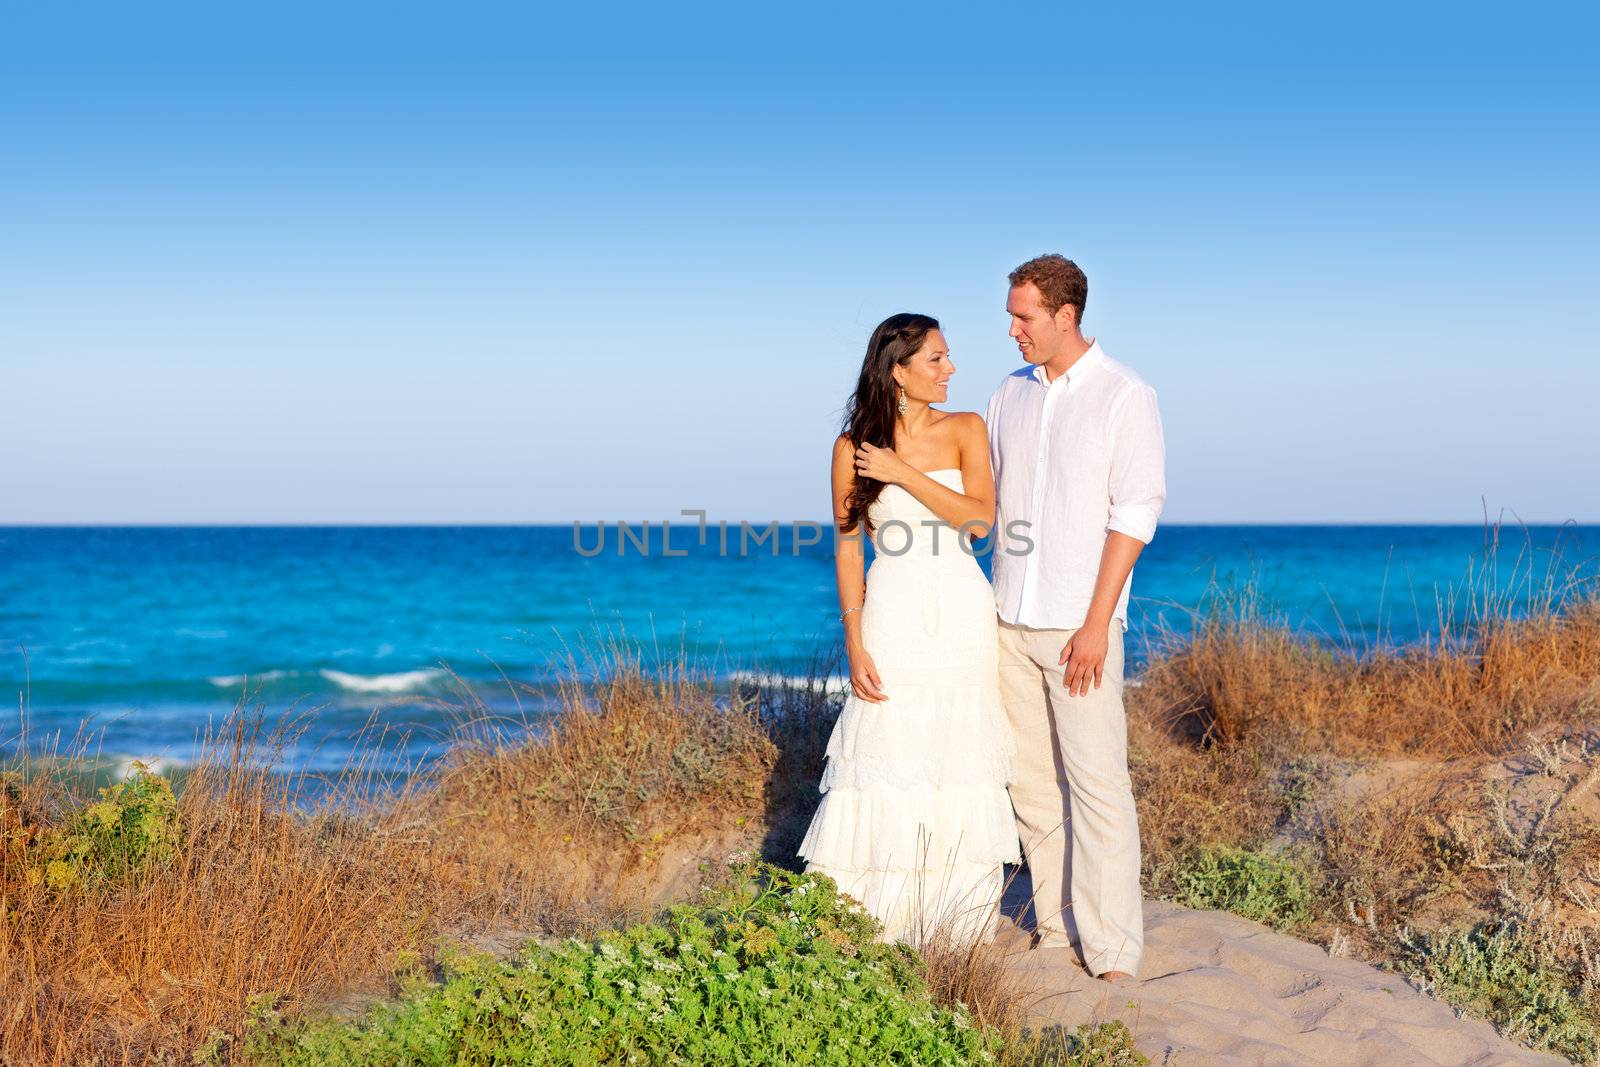 couple in love in the beach dune on Mediterranean sea